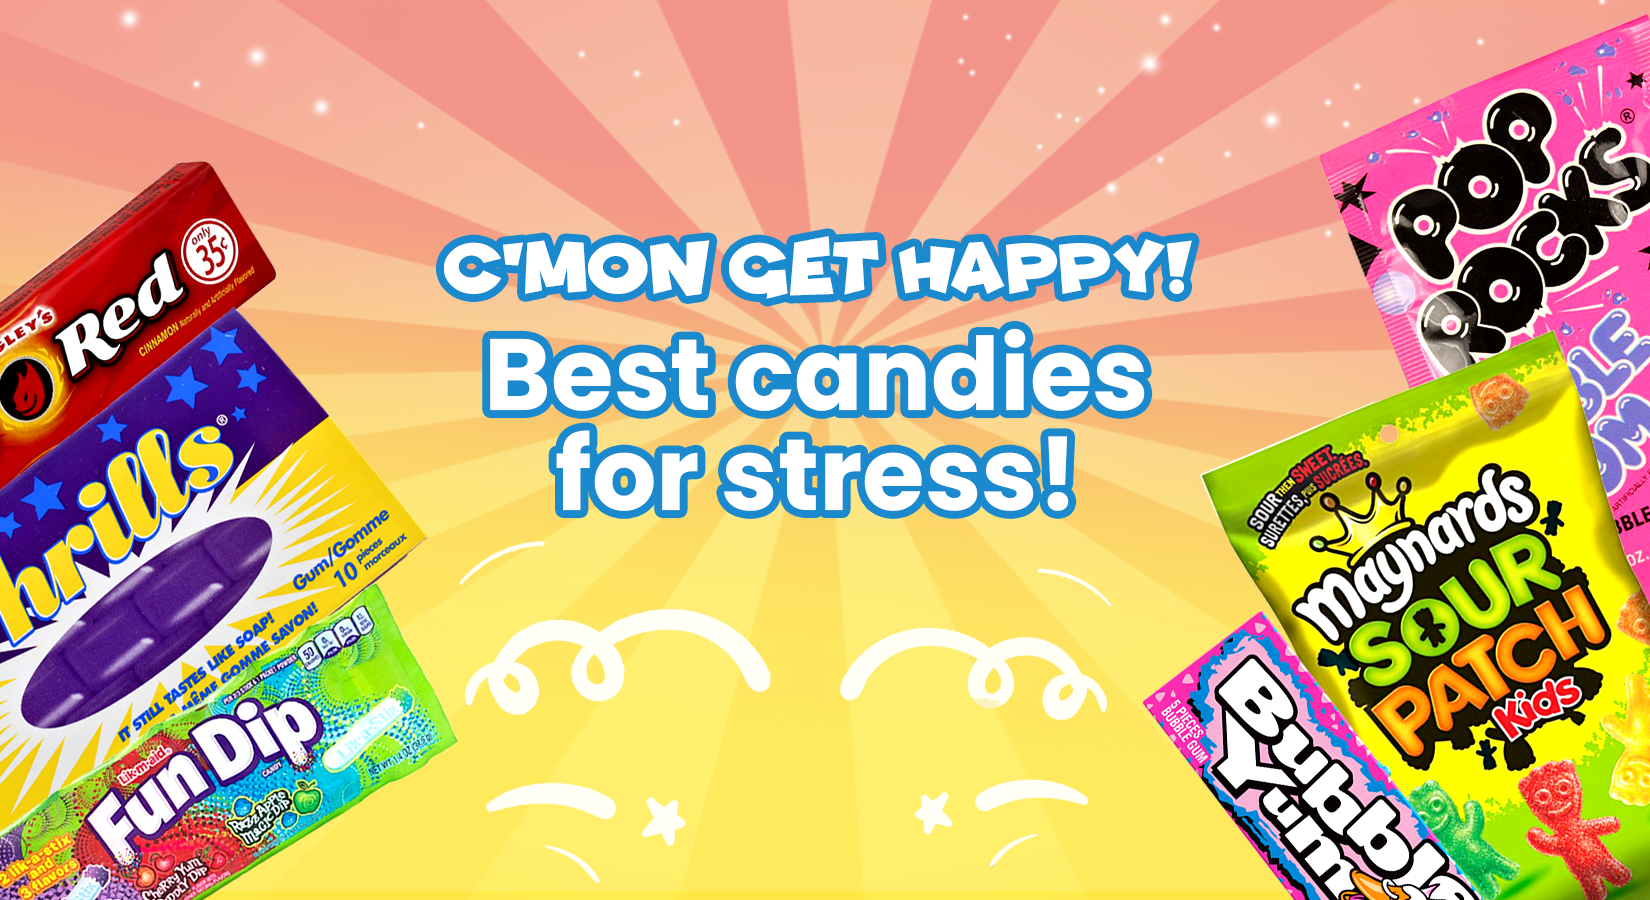 C'mon get HAPPY! Best candies for stress